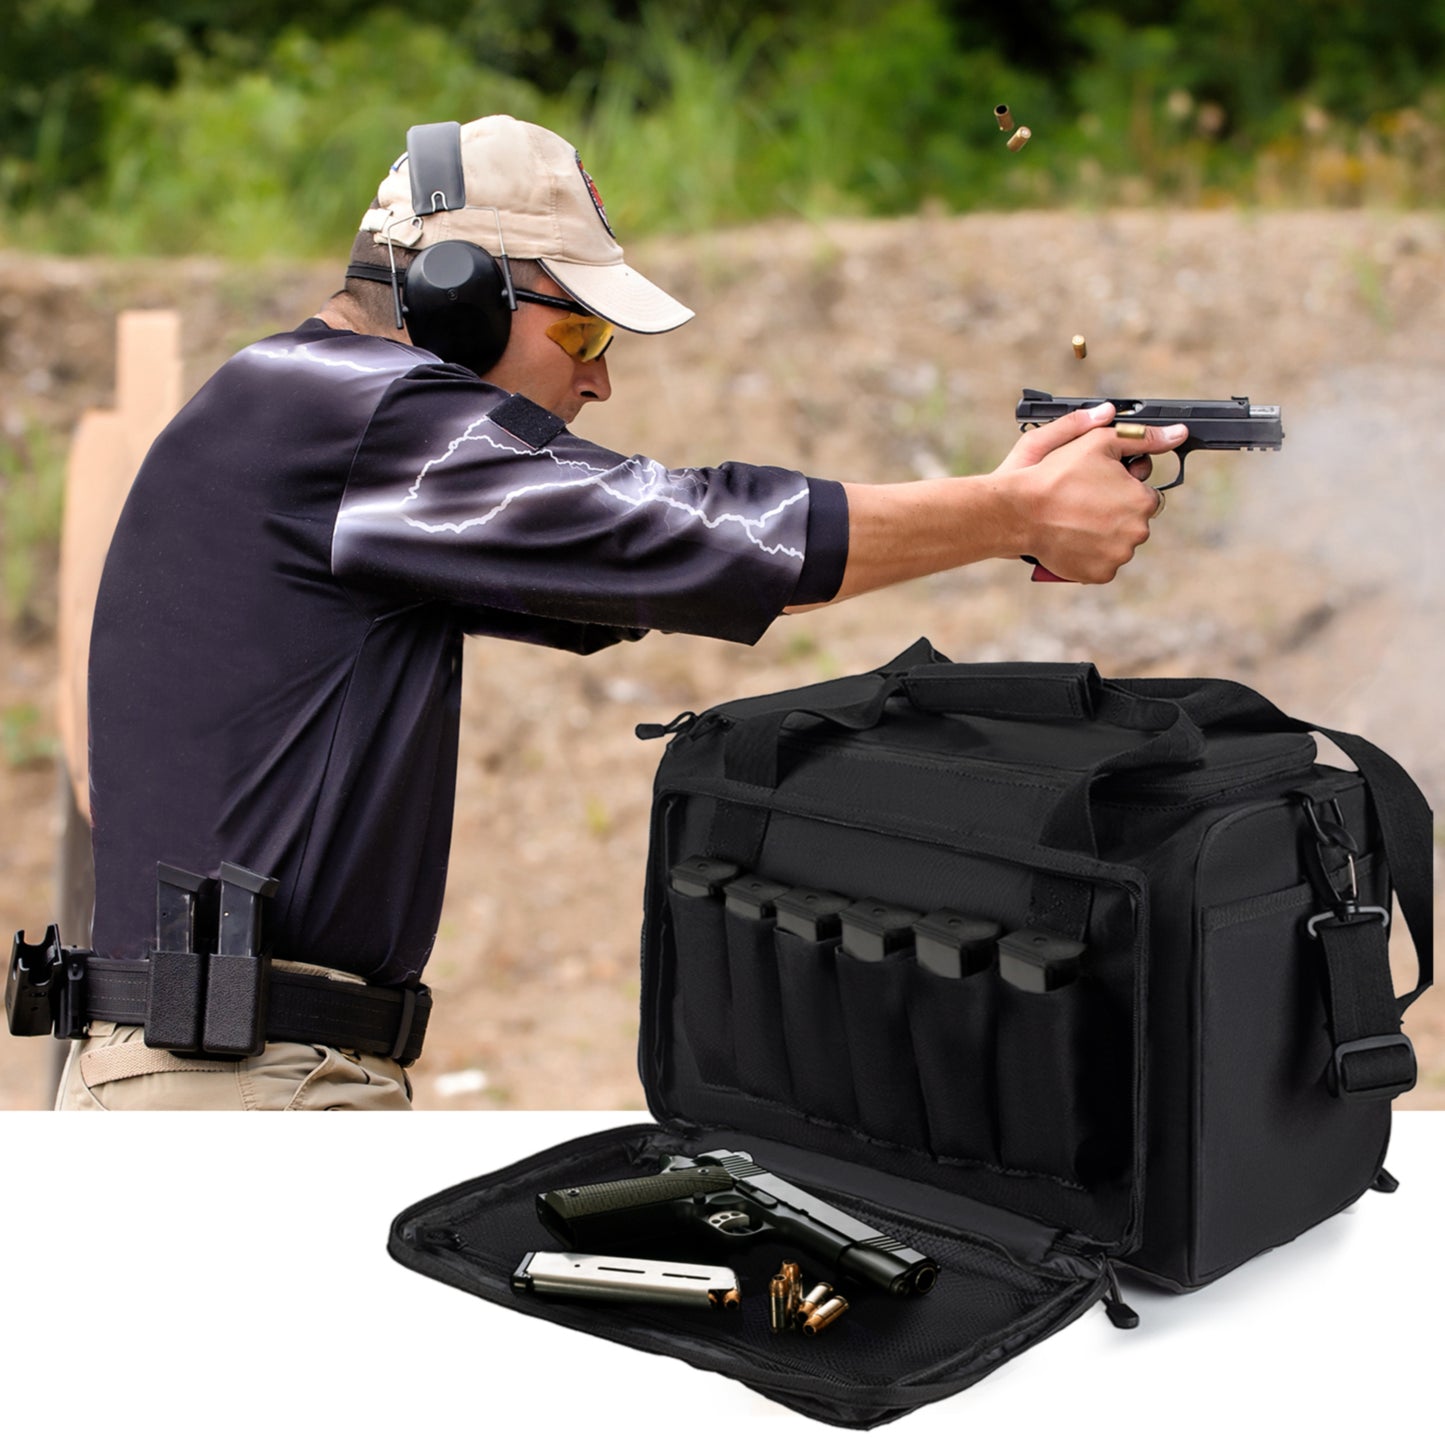 Pistol Range Bag for Handguns and Ammo with 6 Magazine Slots